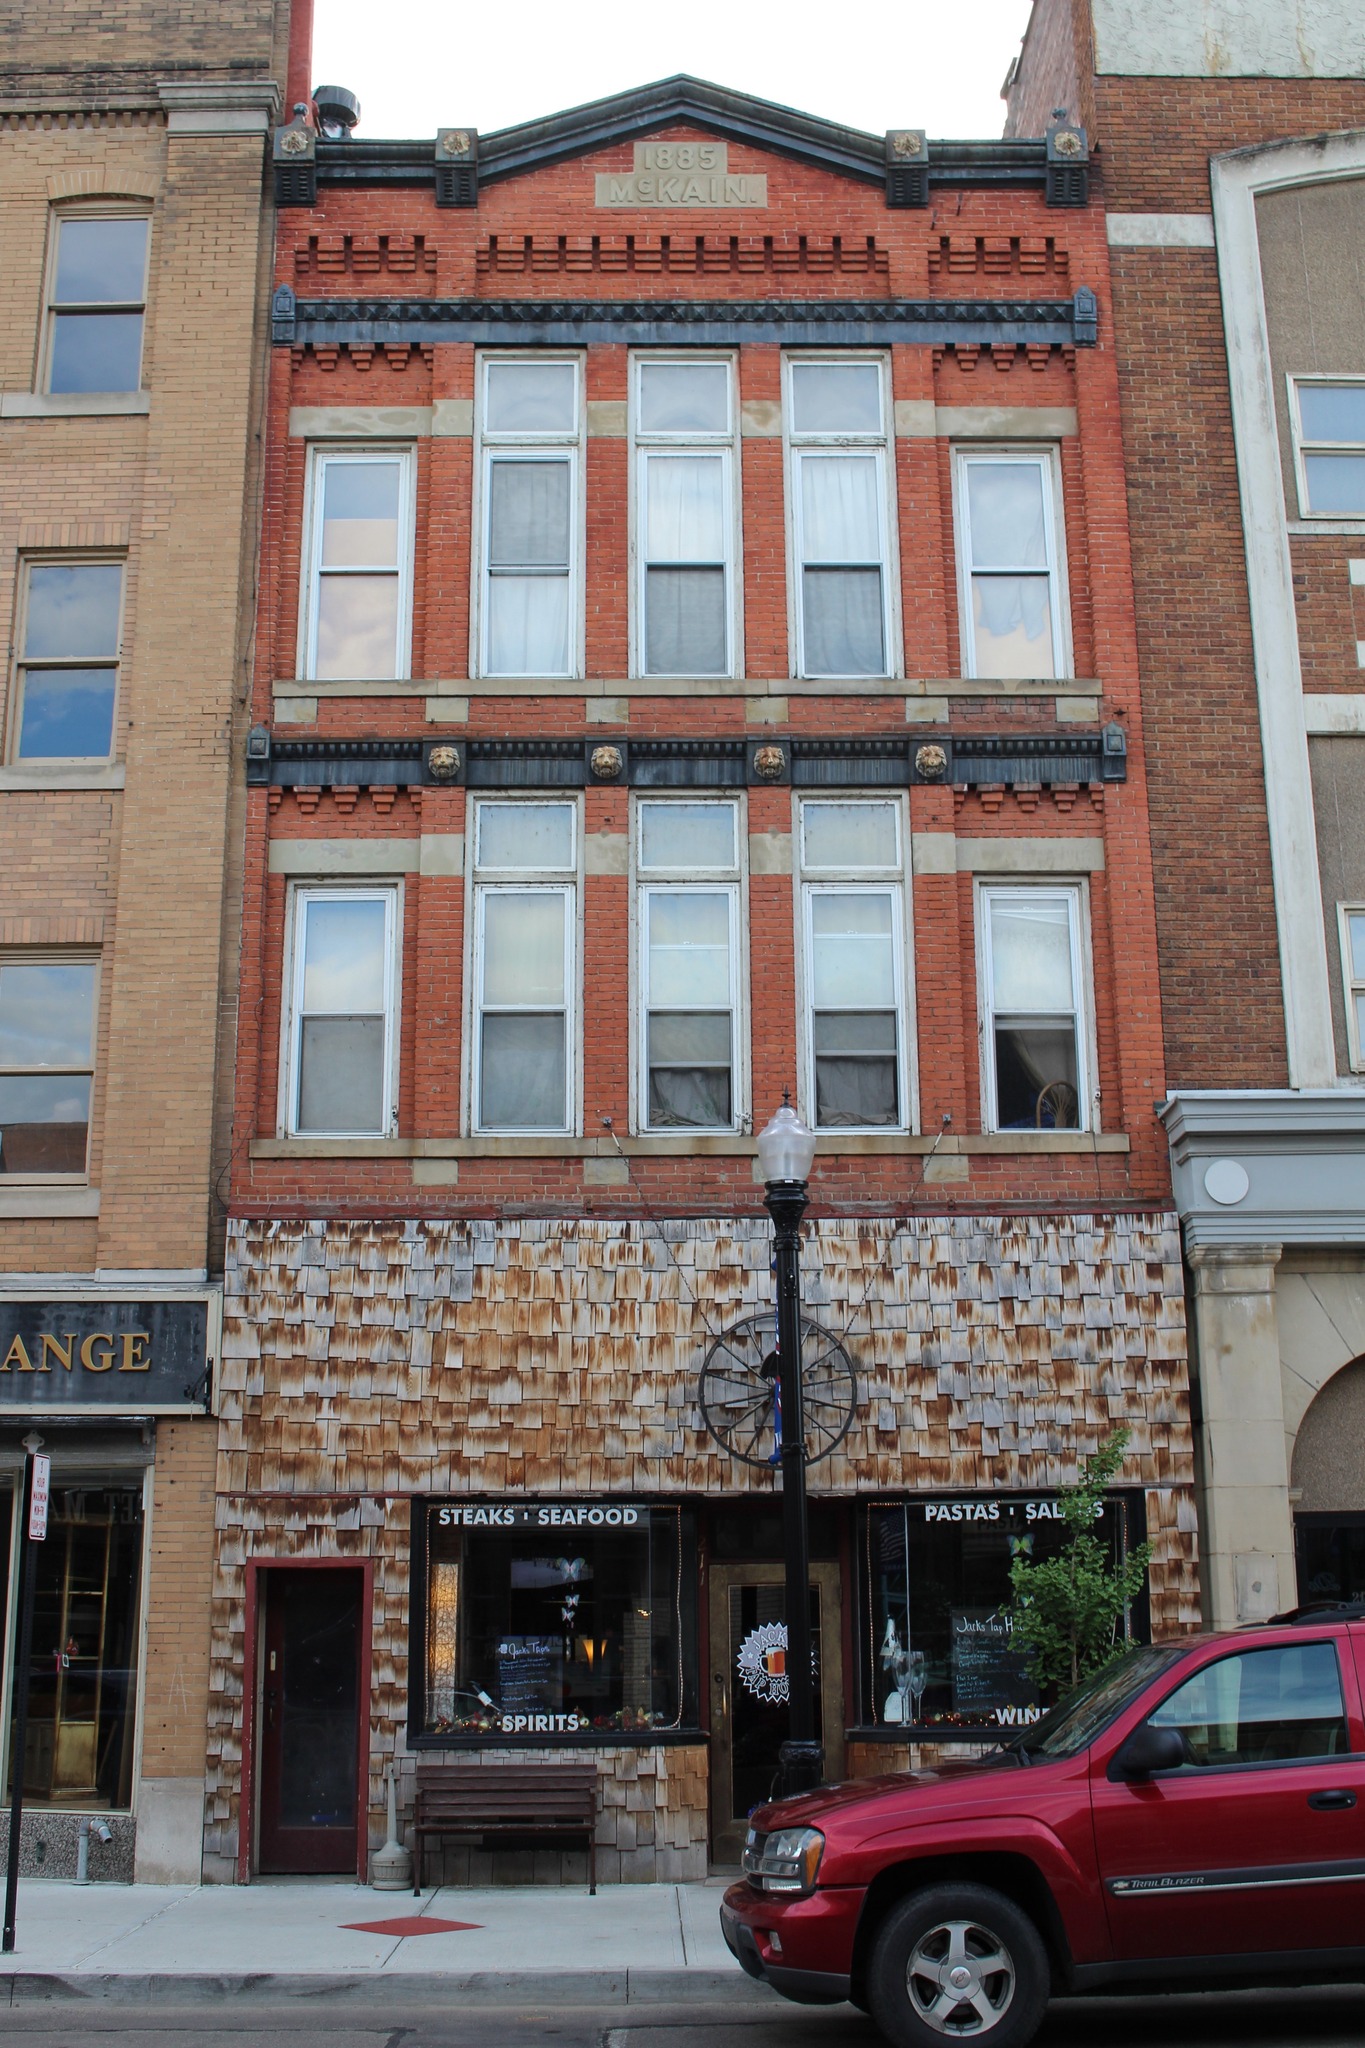 The 1885 McKain Building